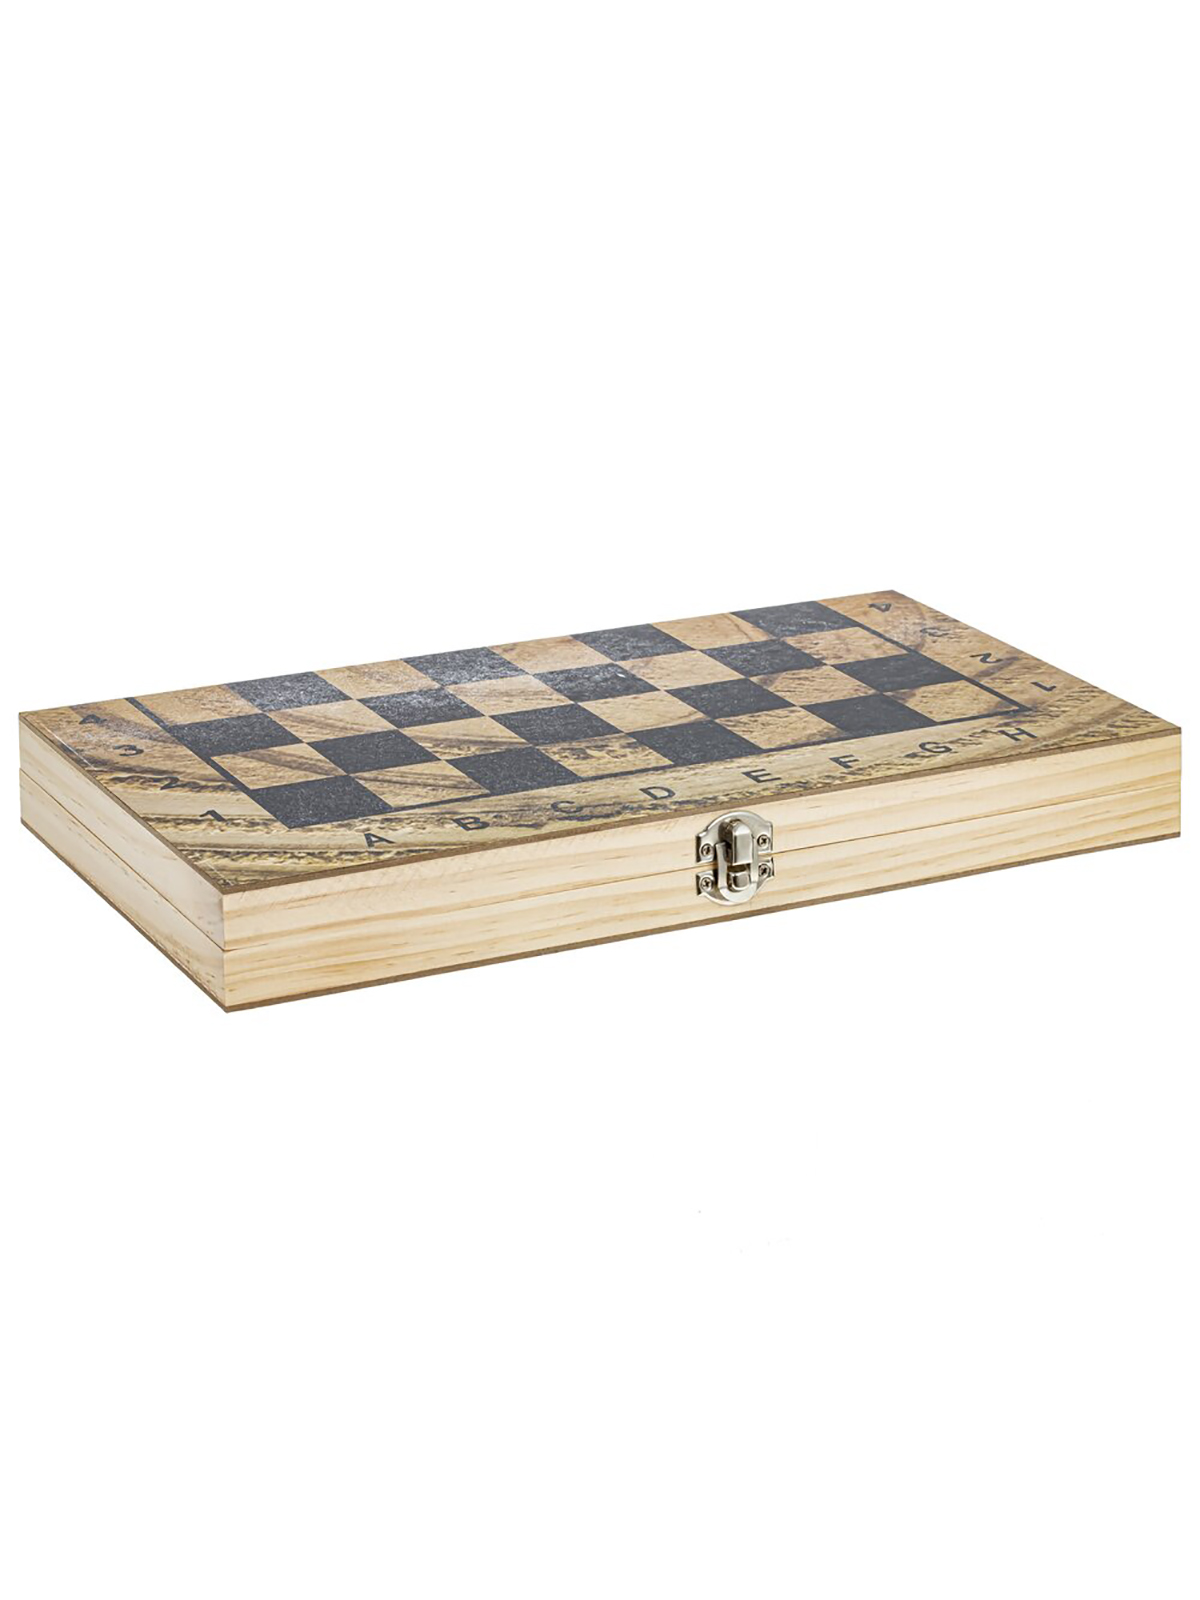 Шахматы шашки нарды 3 в 1 Remecoclub деревянные 796262 34x17x4 см